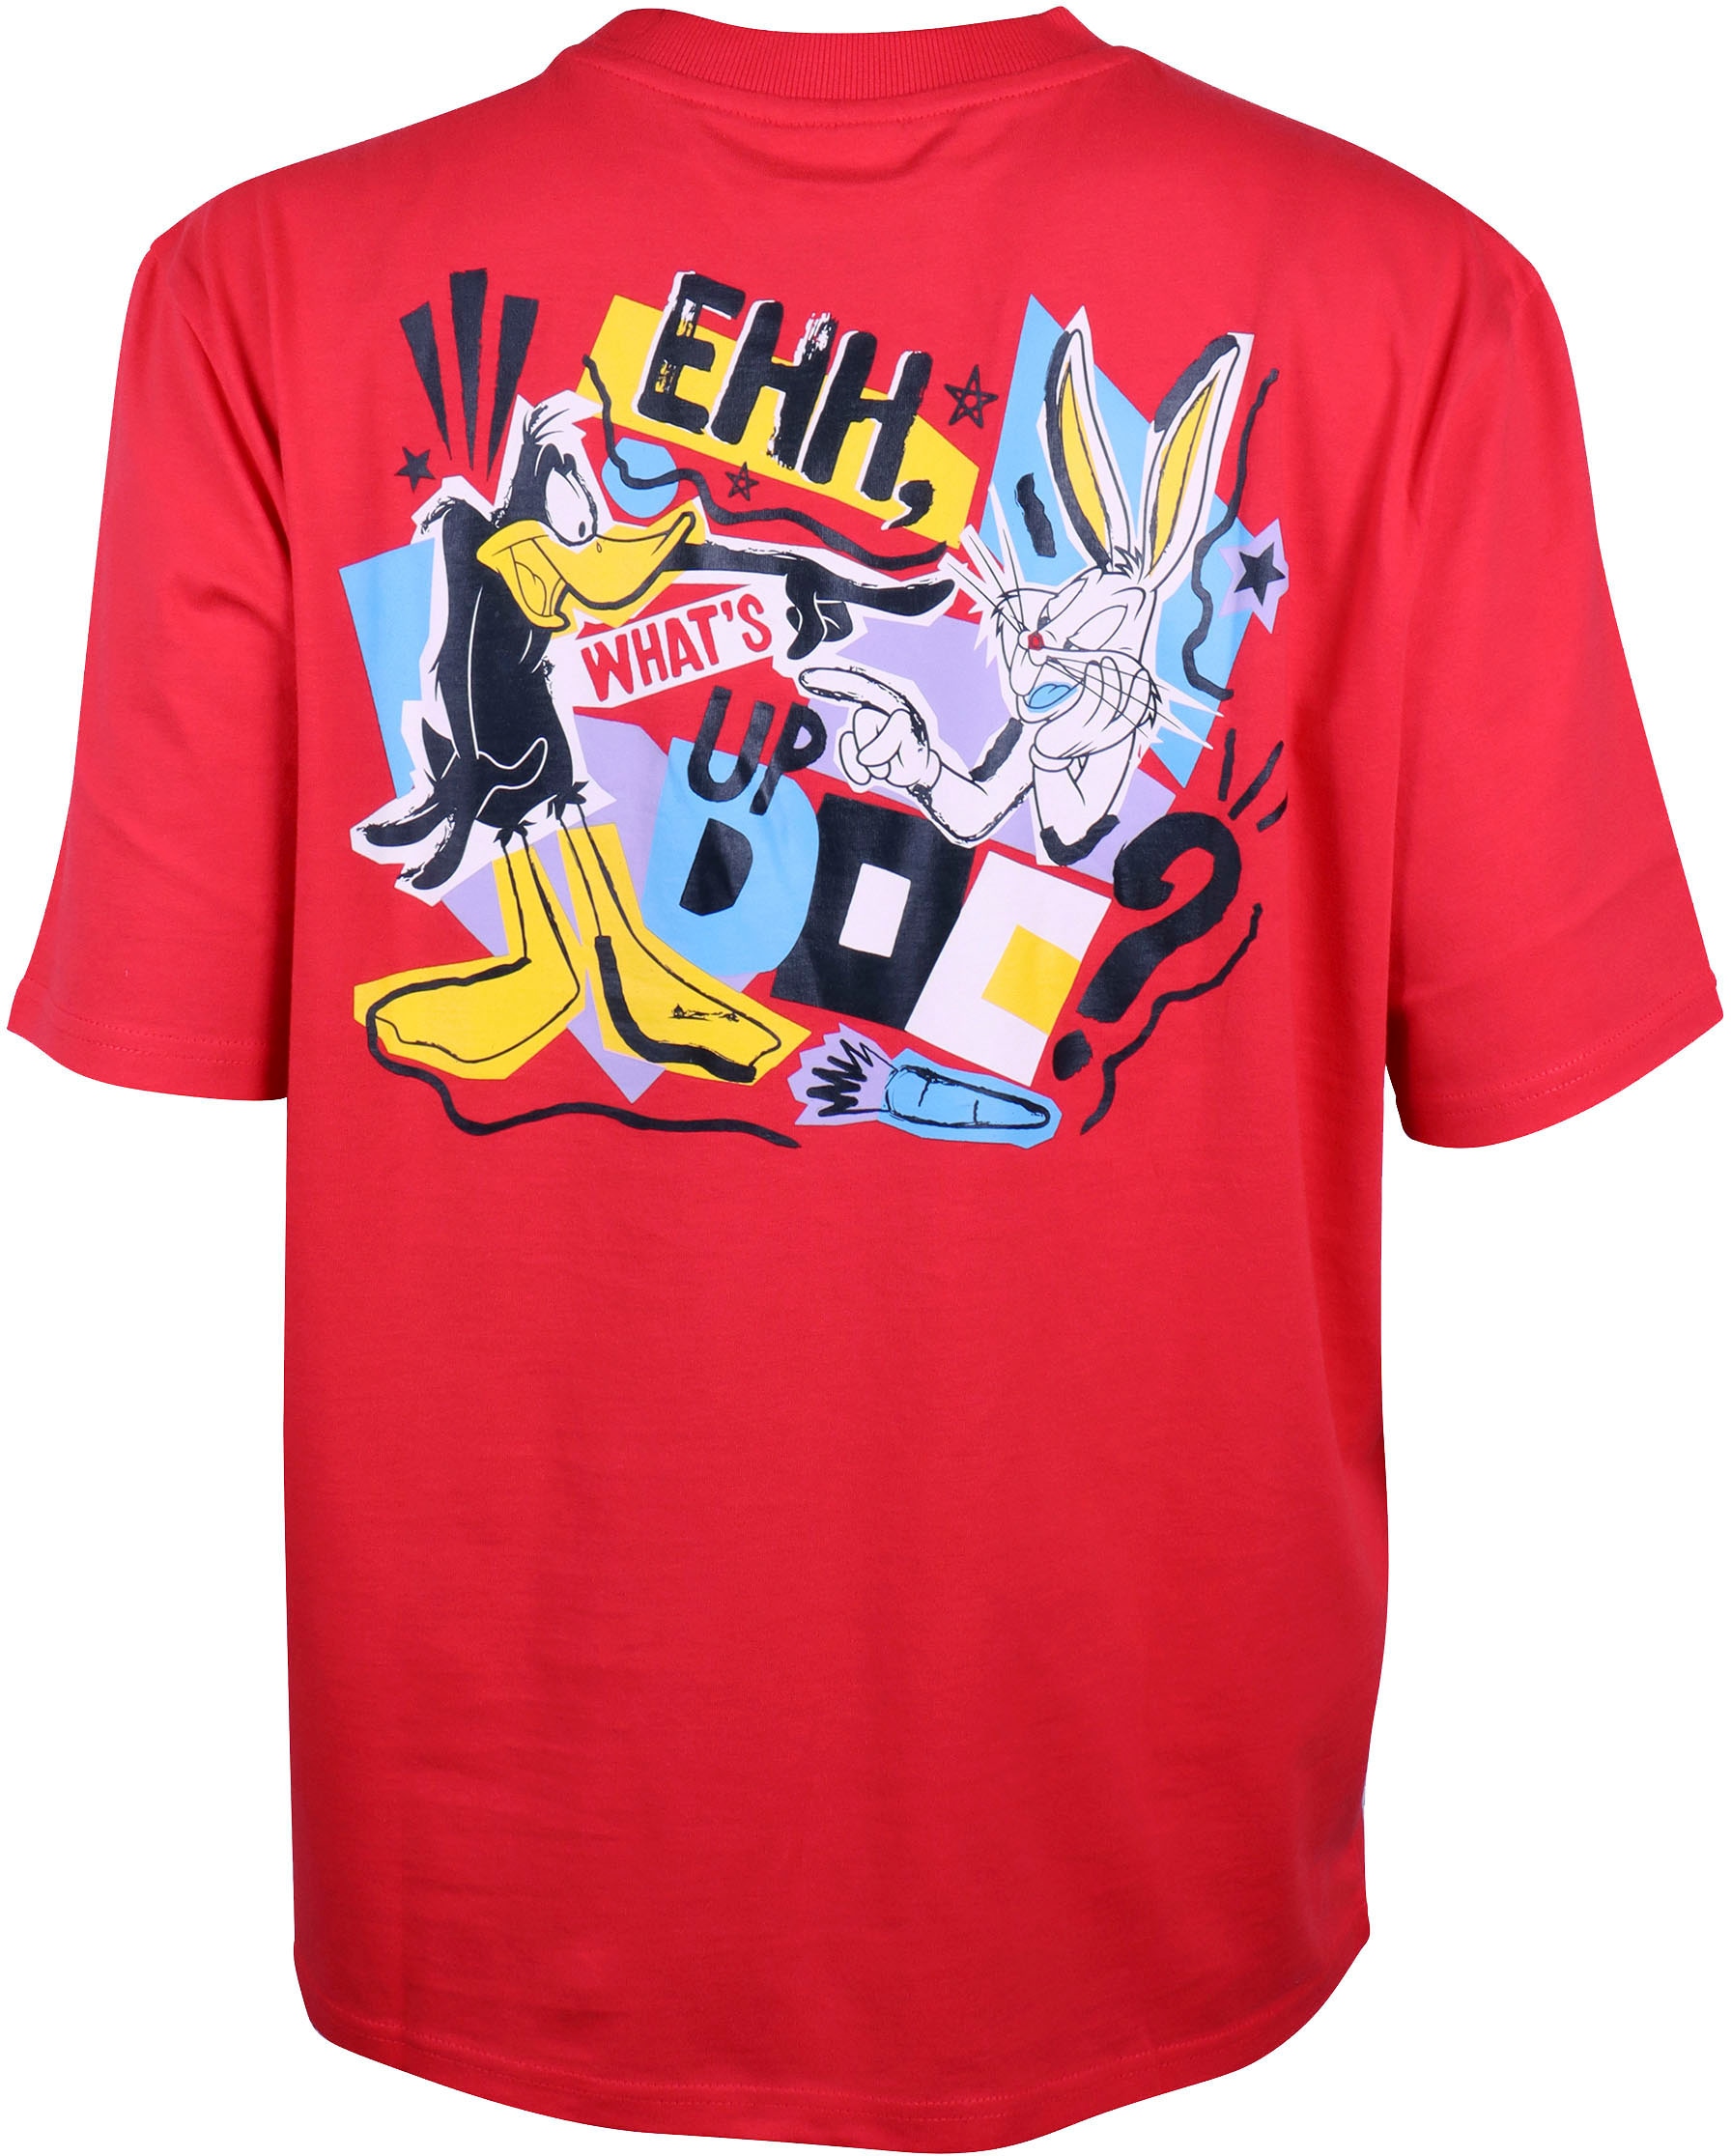 Comic-Motiv York T-Shirt, mit Bugs Duck kaufen Duffy New online mit Capelli Bunny